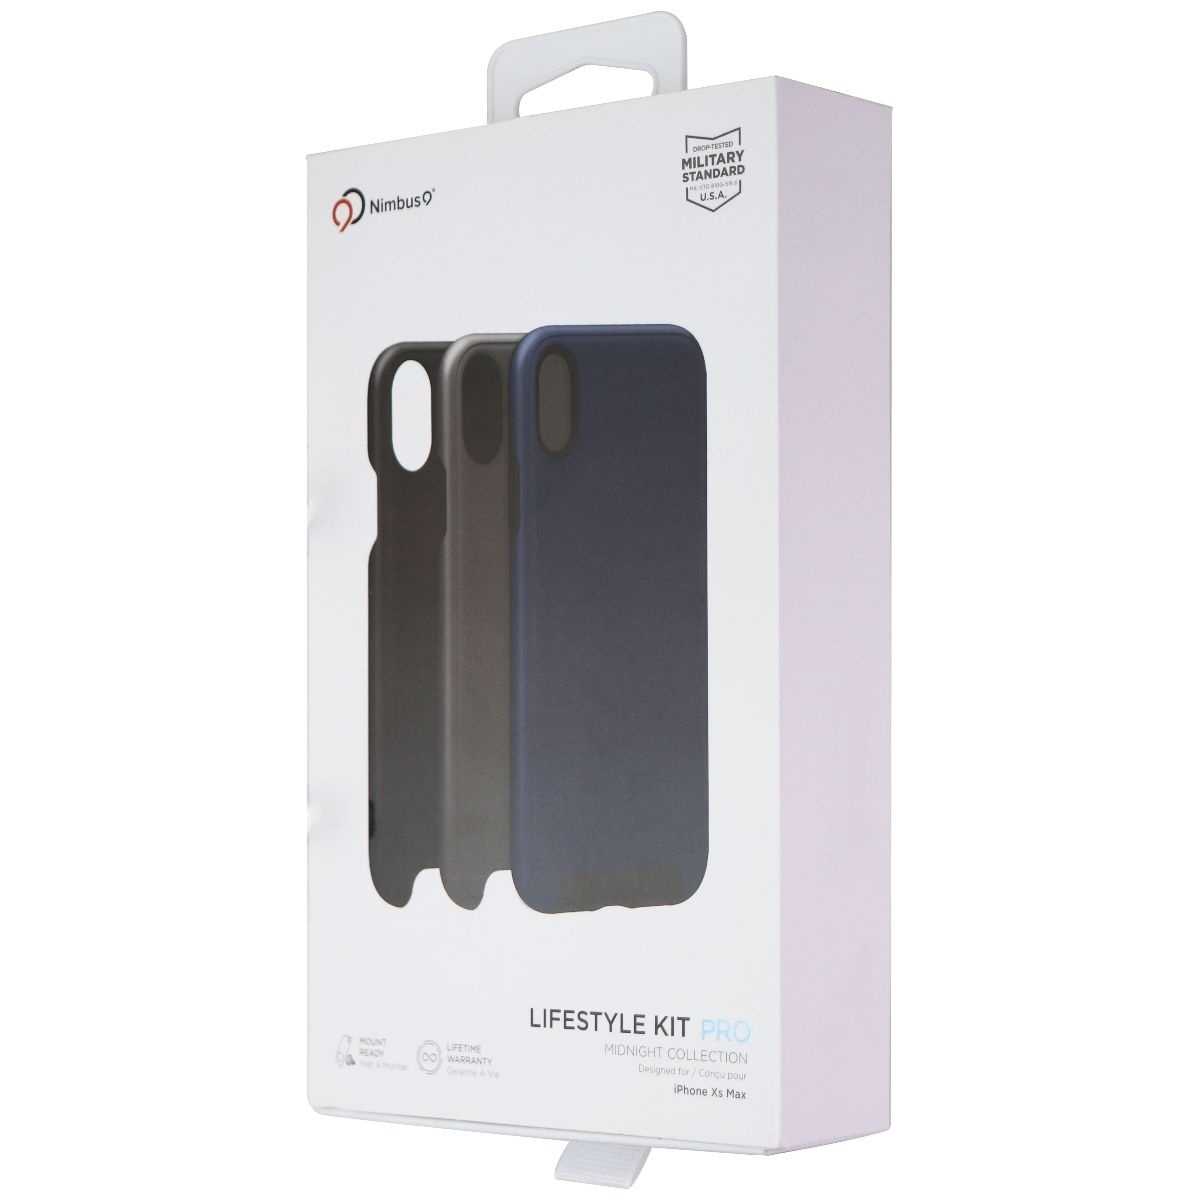 Nimbus9 LifeStyle Kit Pro Case For IPhone Xs Max - Midnight Black/Gray/Blue